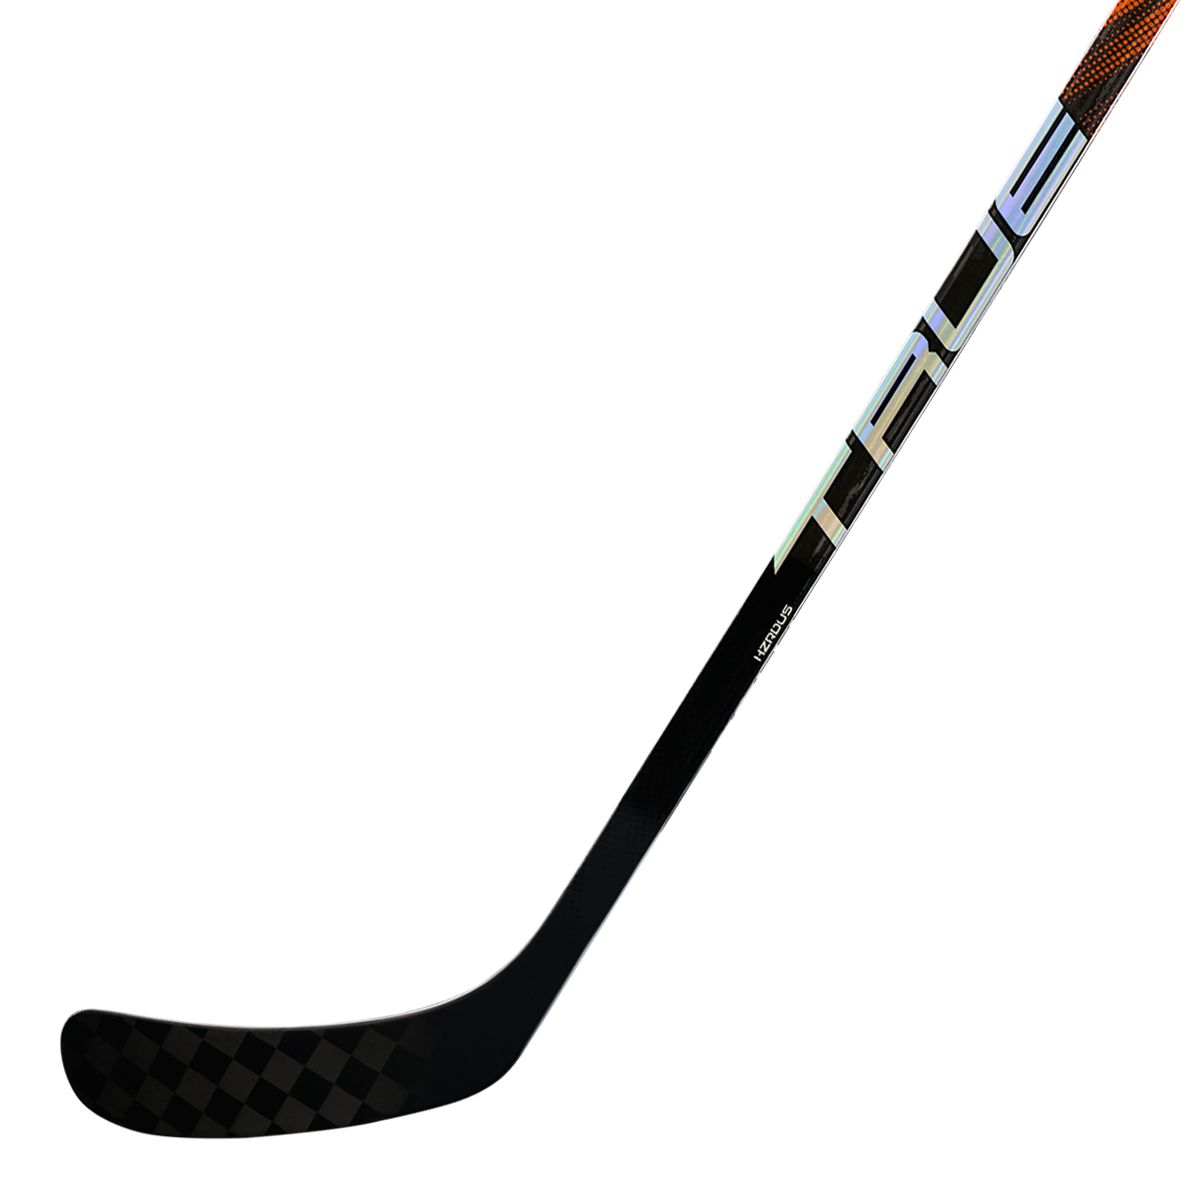 True Hzrdus 9X Grip Intermediate Hockey Stick